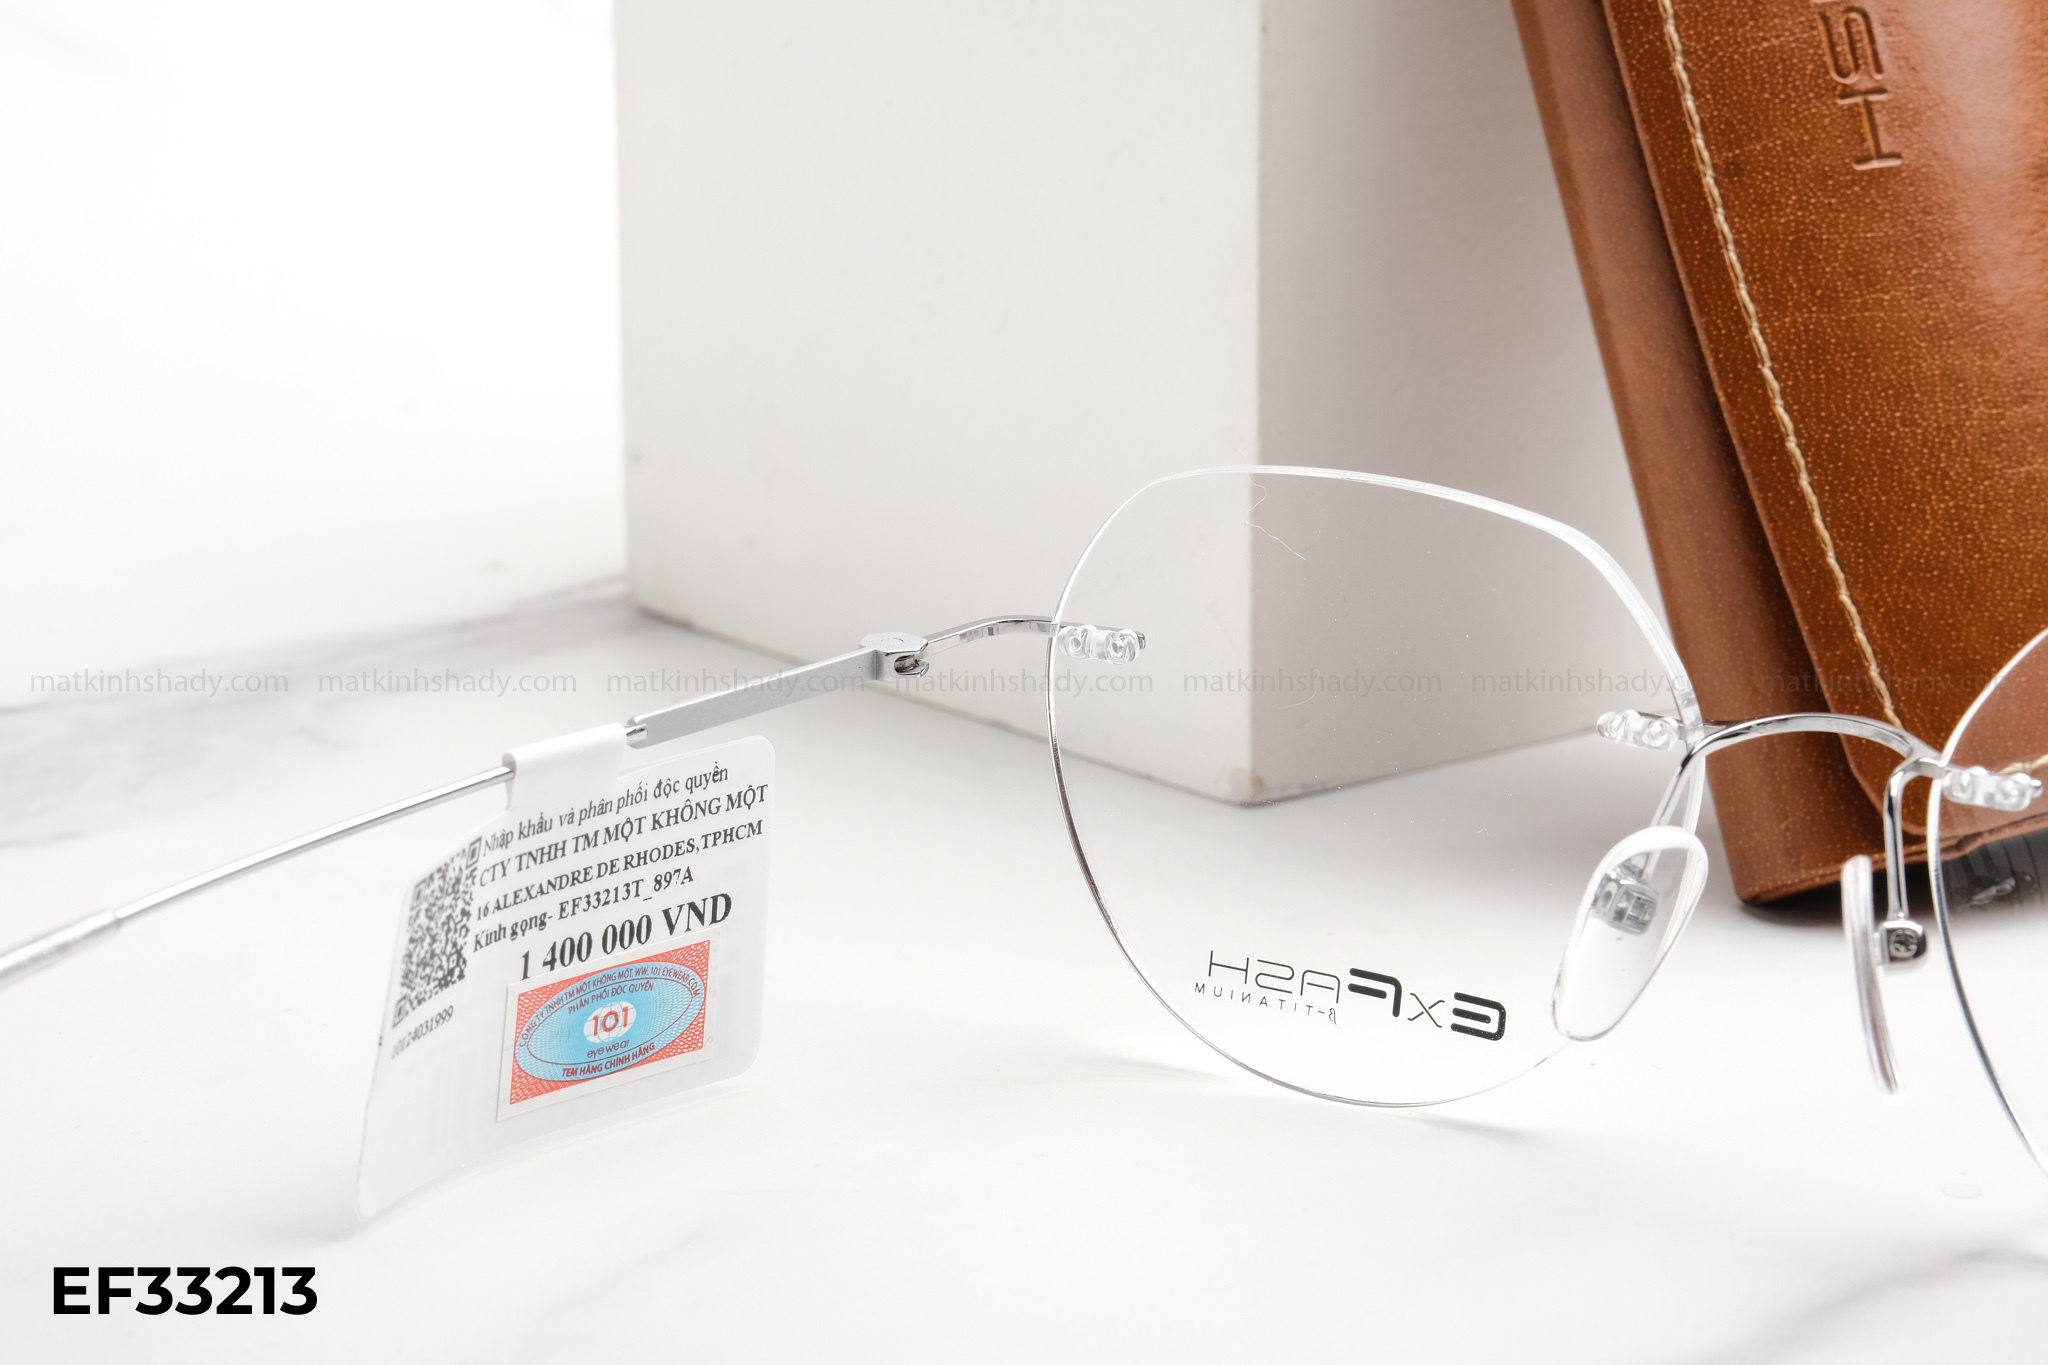  Exfash Eyewear - Glasses - EF33213 